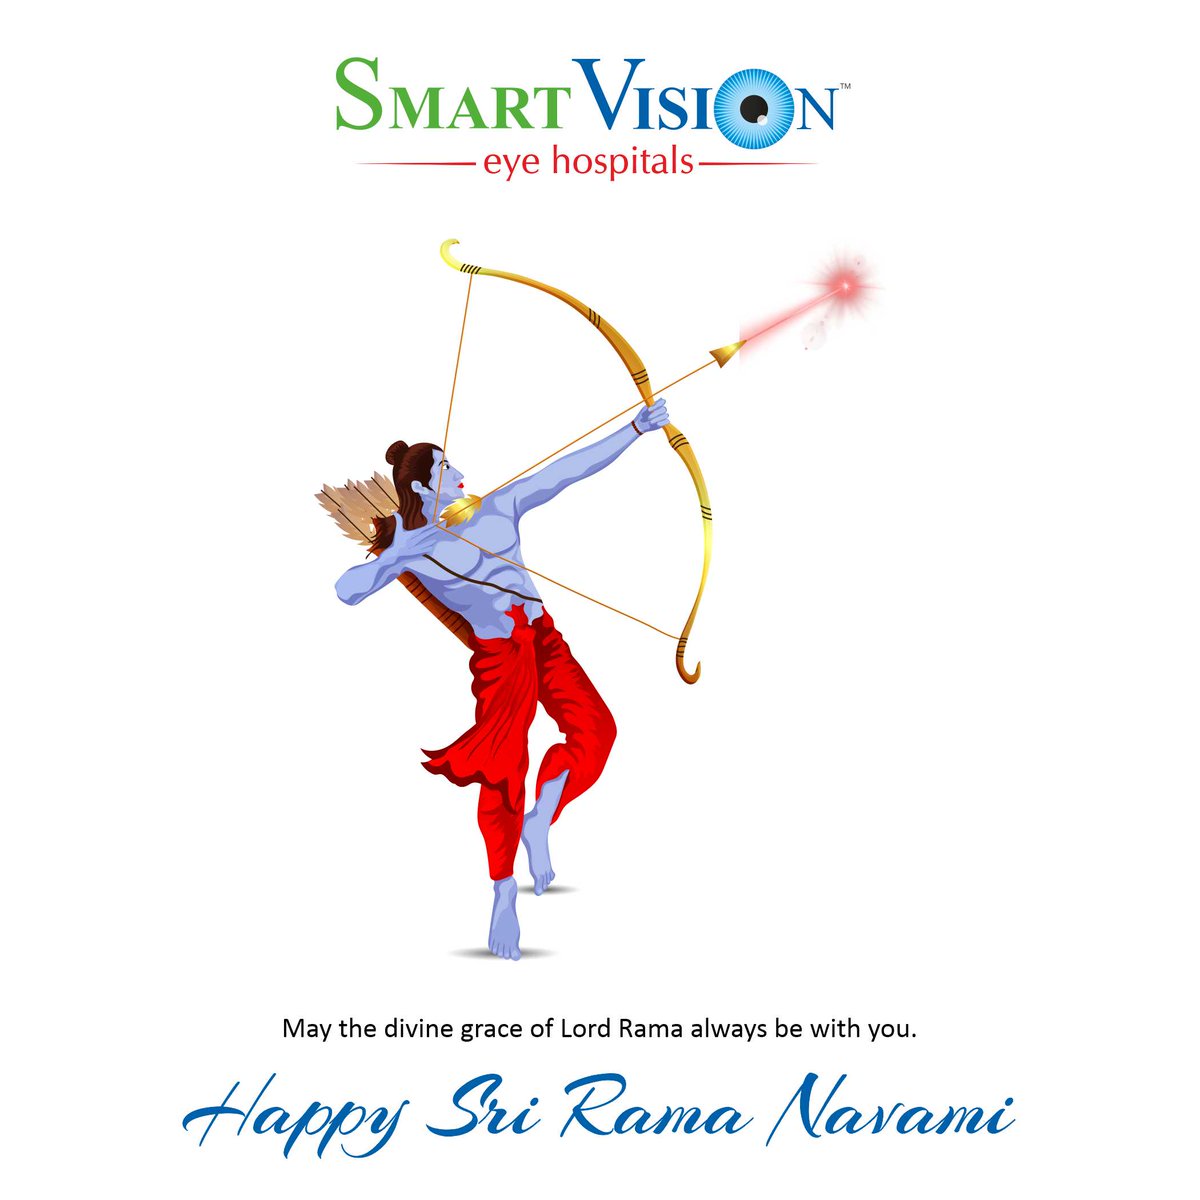 May the divine grace of Lord Rama always be with you.
Happy Sri Rama Navami 

#Ramnavami #SriramaNavami #BanjaraHills #SmartvisioneyeHospitals #eyecare #EyeHospitals #Lasik #LasikIndia #Cataract #Ramnavami2023